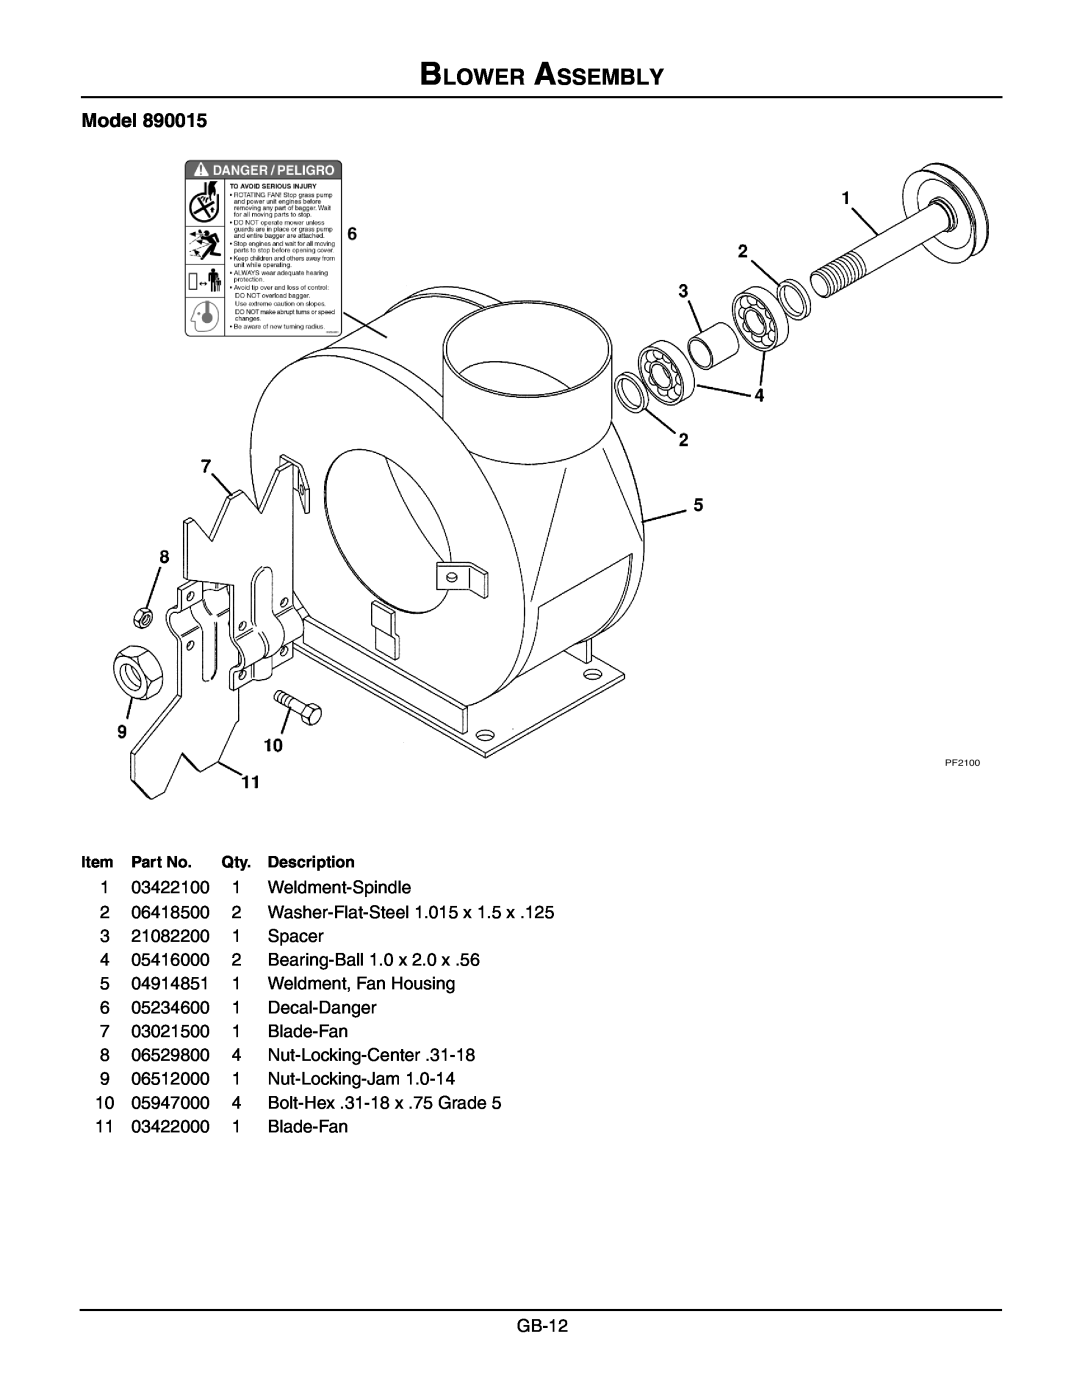 Gravely 890015* manual Blower Assembly, Model 